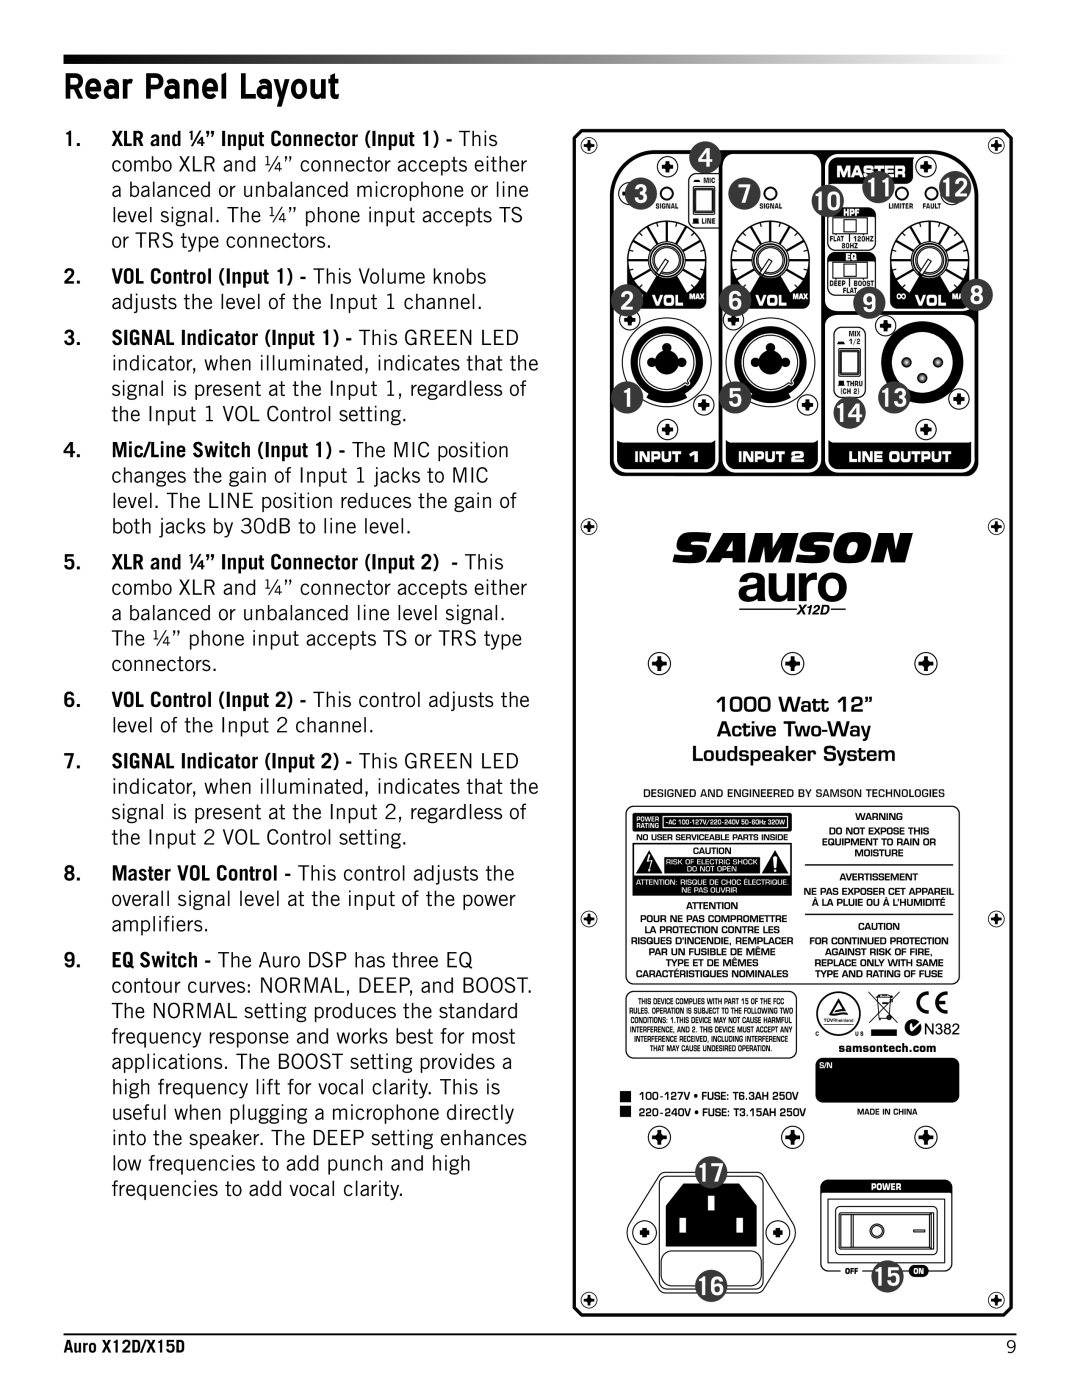 Samson owner manual Rear Panel Layout, Auro X12D/X15D 